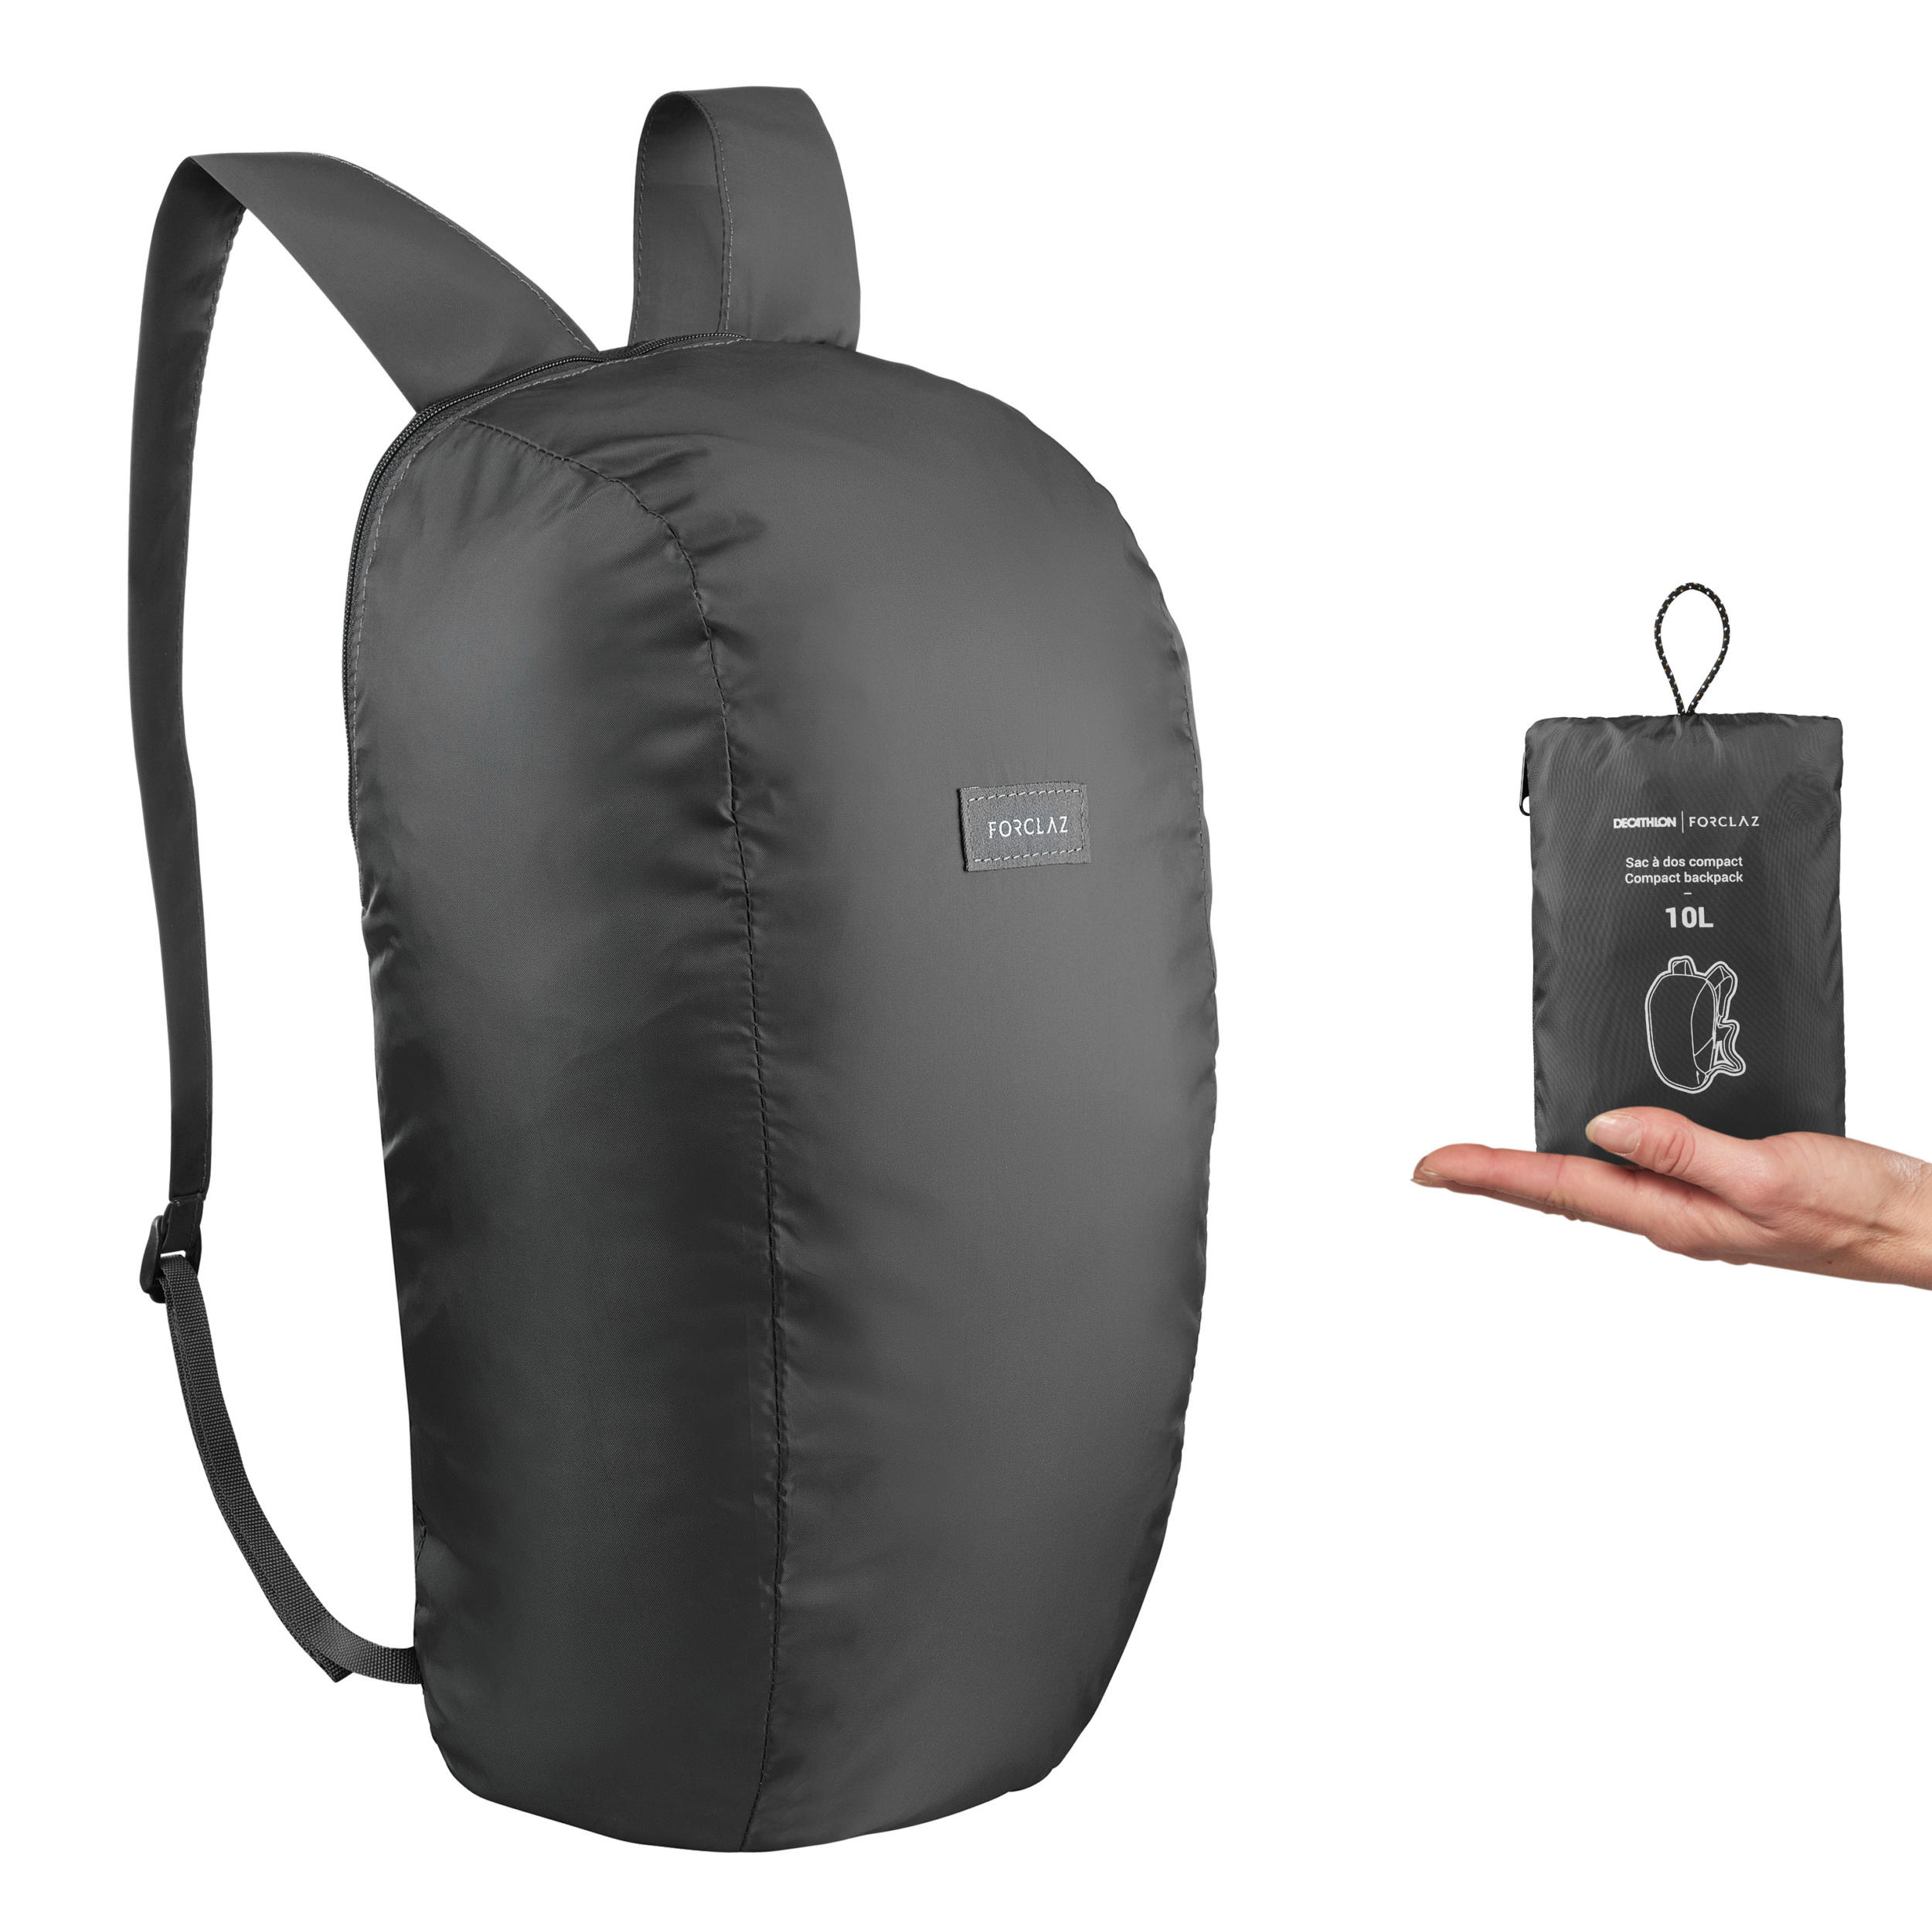 Decathlon Black Bum Bags Styles, Prices - Trendyol